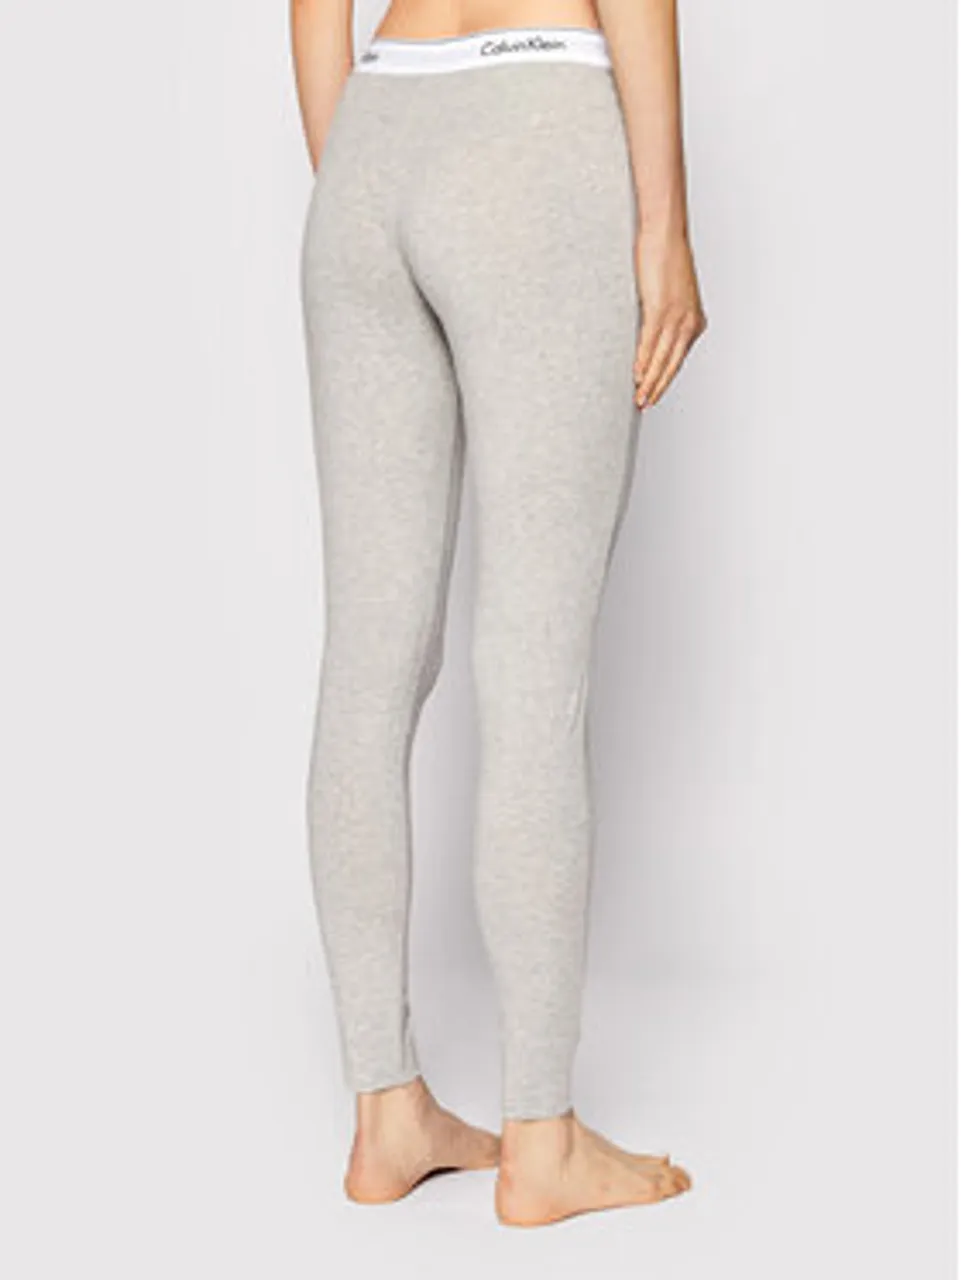 Calvin Klein Underwear Leggings 0000D1632E Grau Slim Fit - Preise  vergleichen